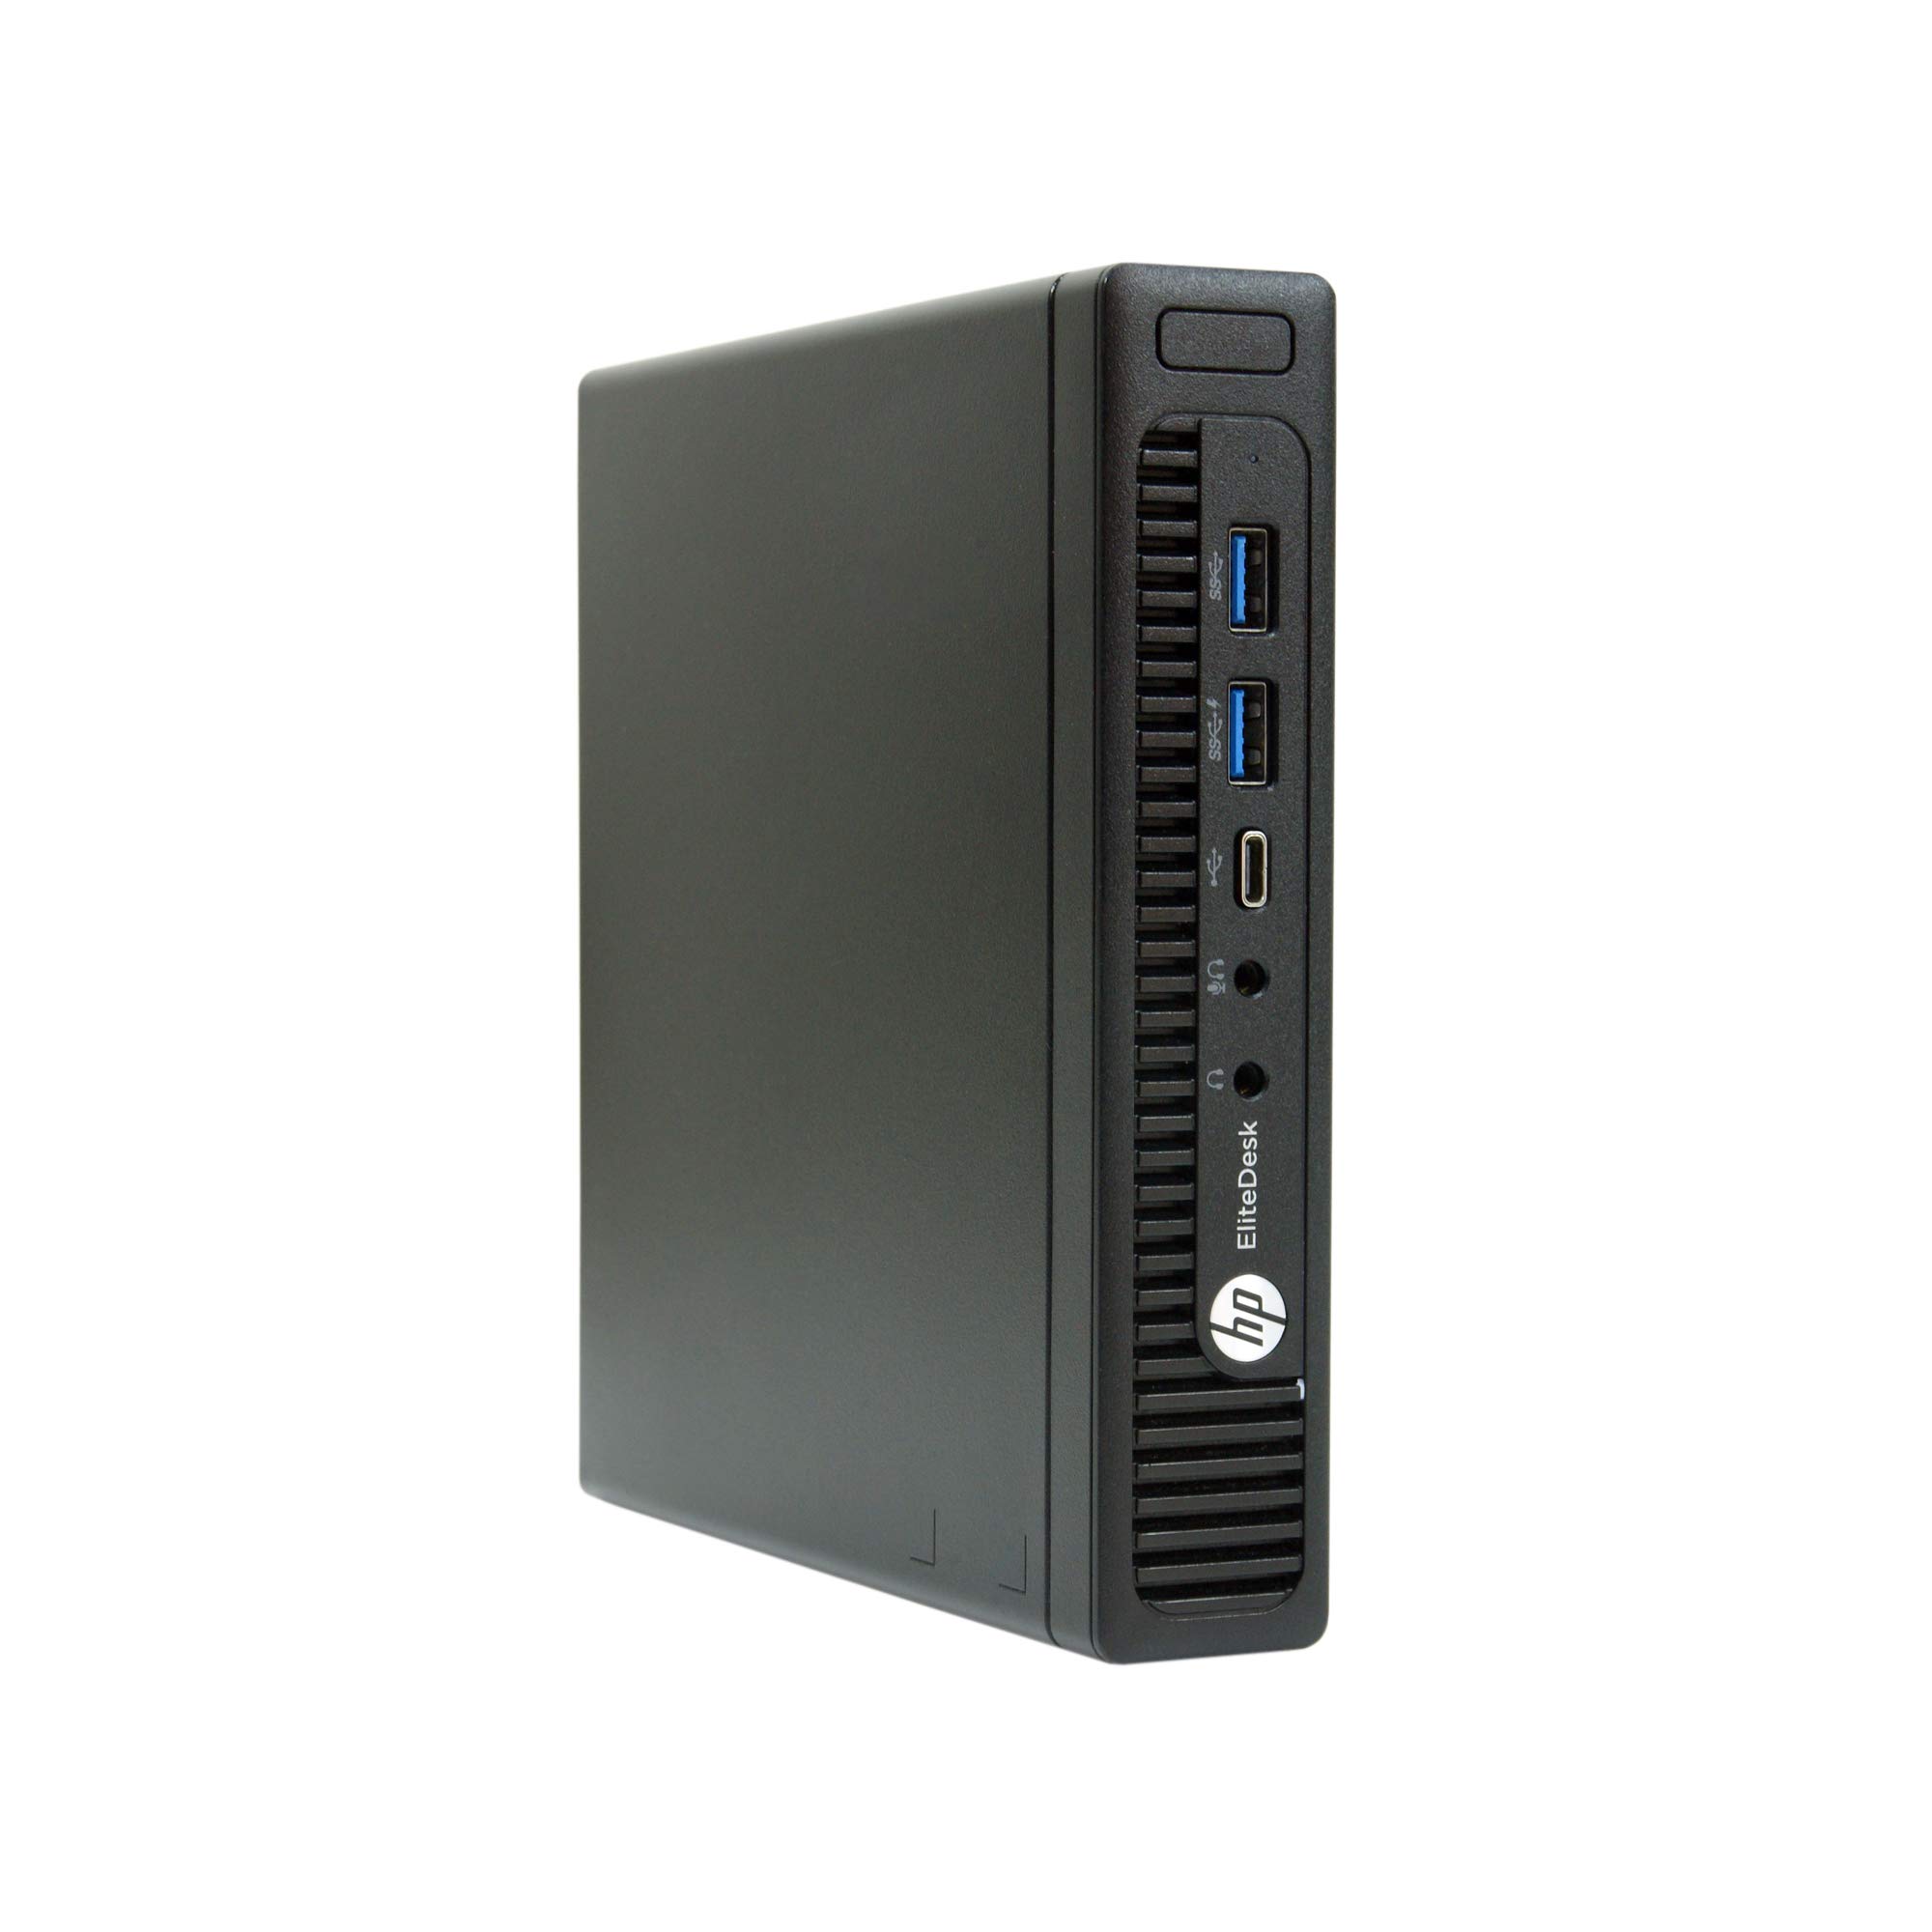 HP EliteDesk 800 G2 - Mini Desktop, Core i5 6500T 2.5 GHz, 16GB RAM, 480GB Solid State Drive, Windows 10 Pro 64bit, (Renewed)